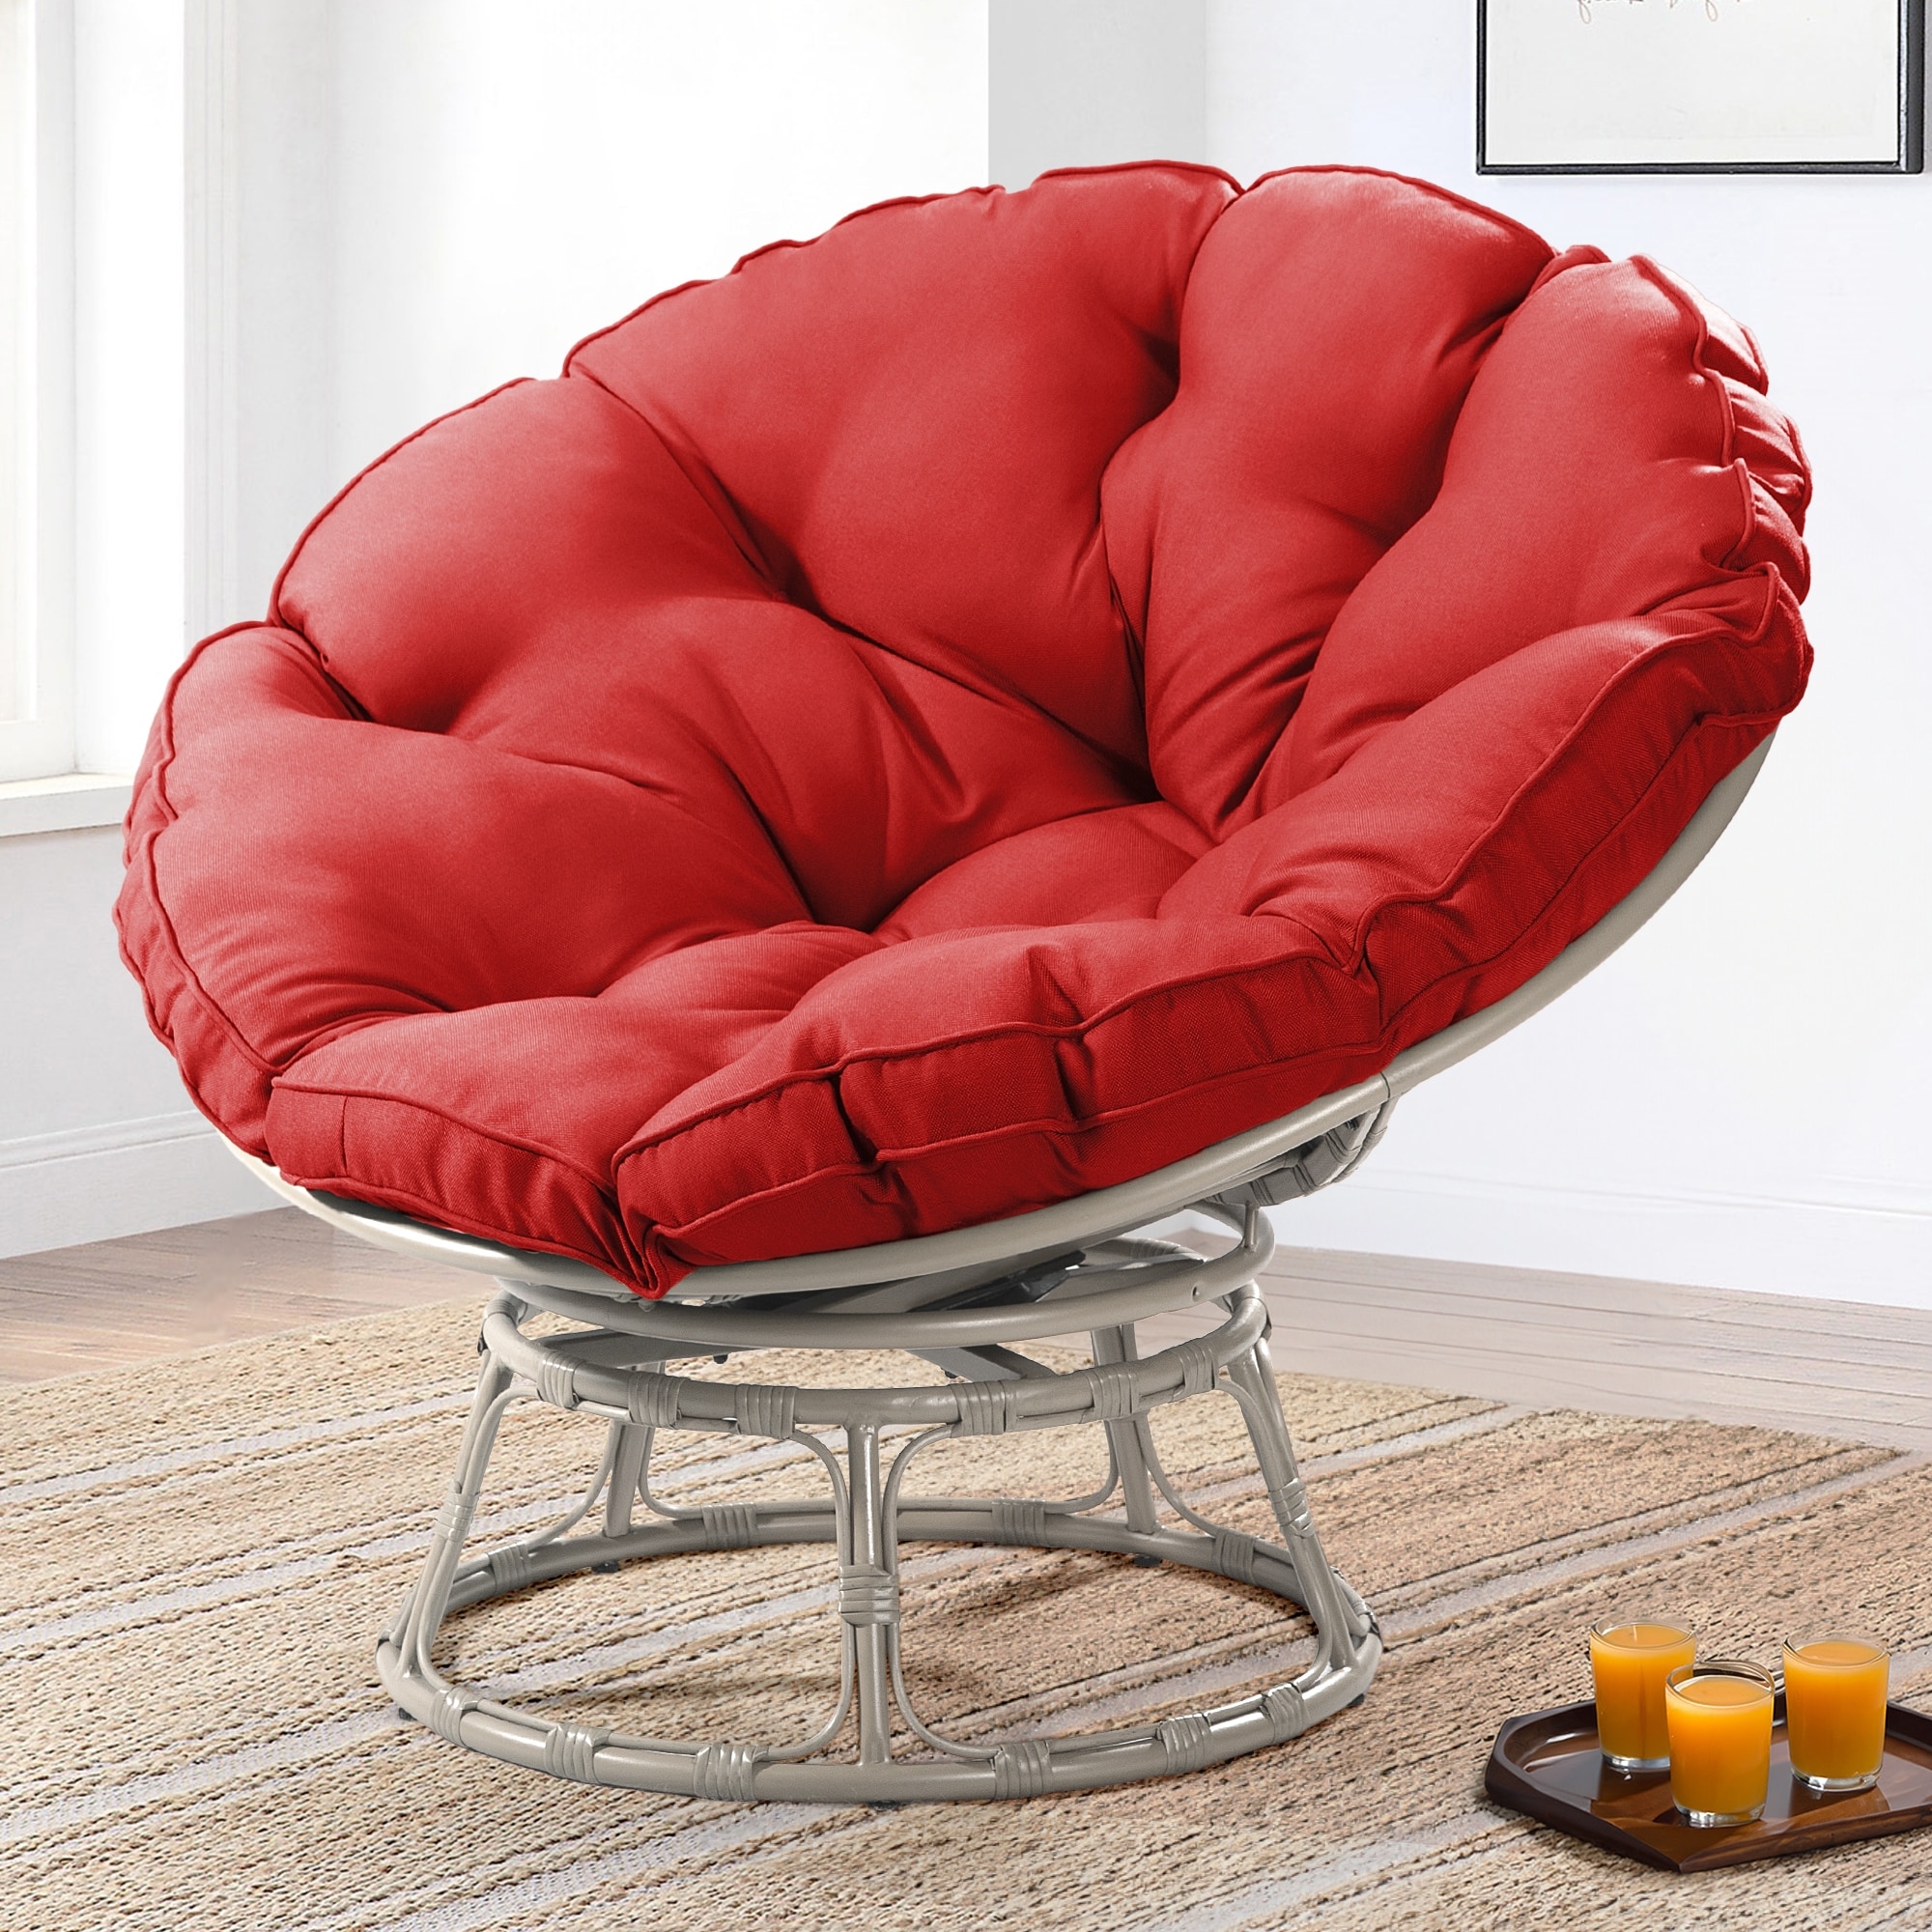 Cozywor Wicker Outdoor Patio Swivel Papasan Lounge Chair With Cushions